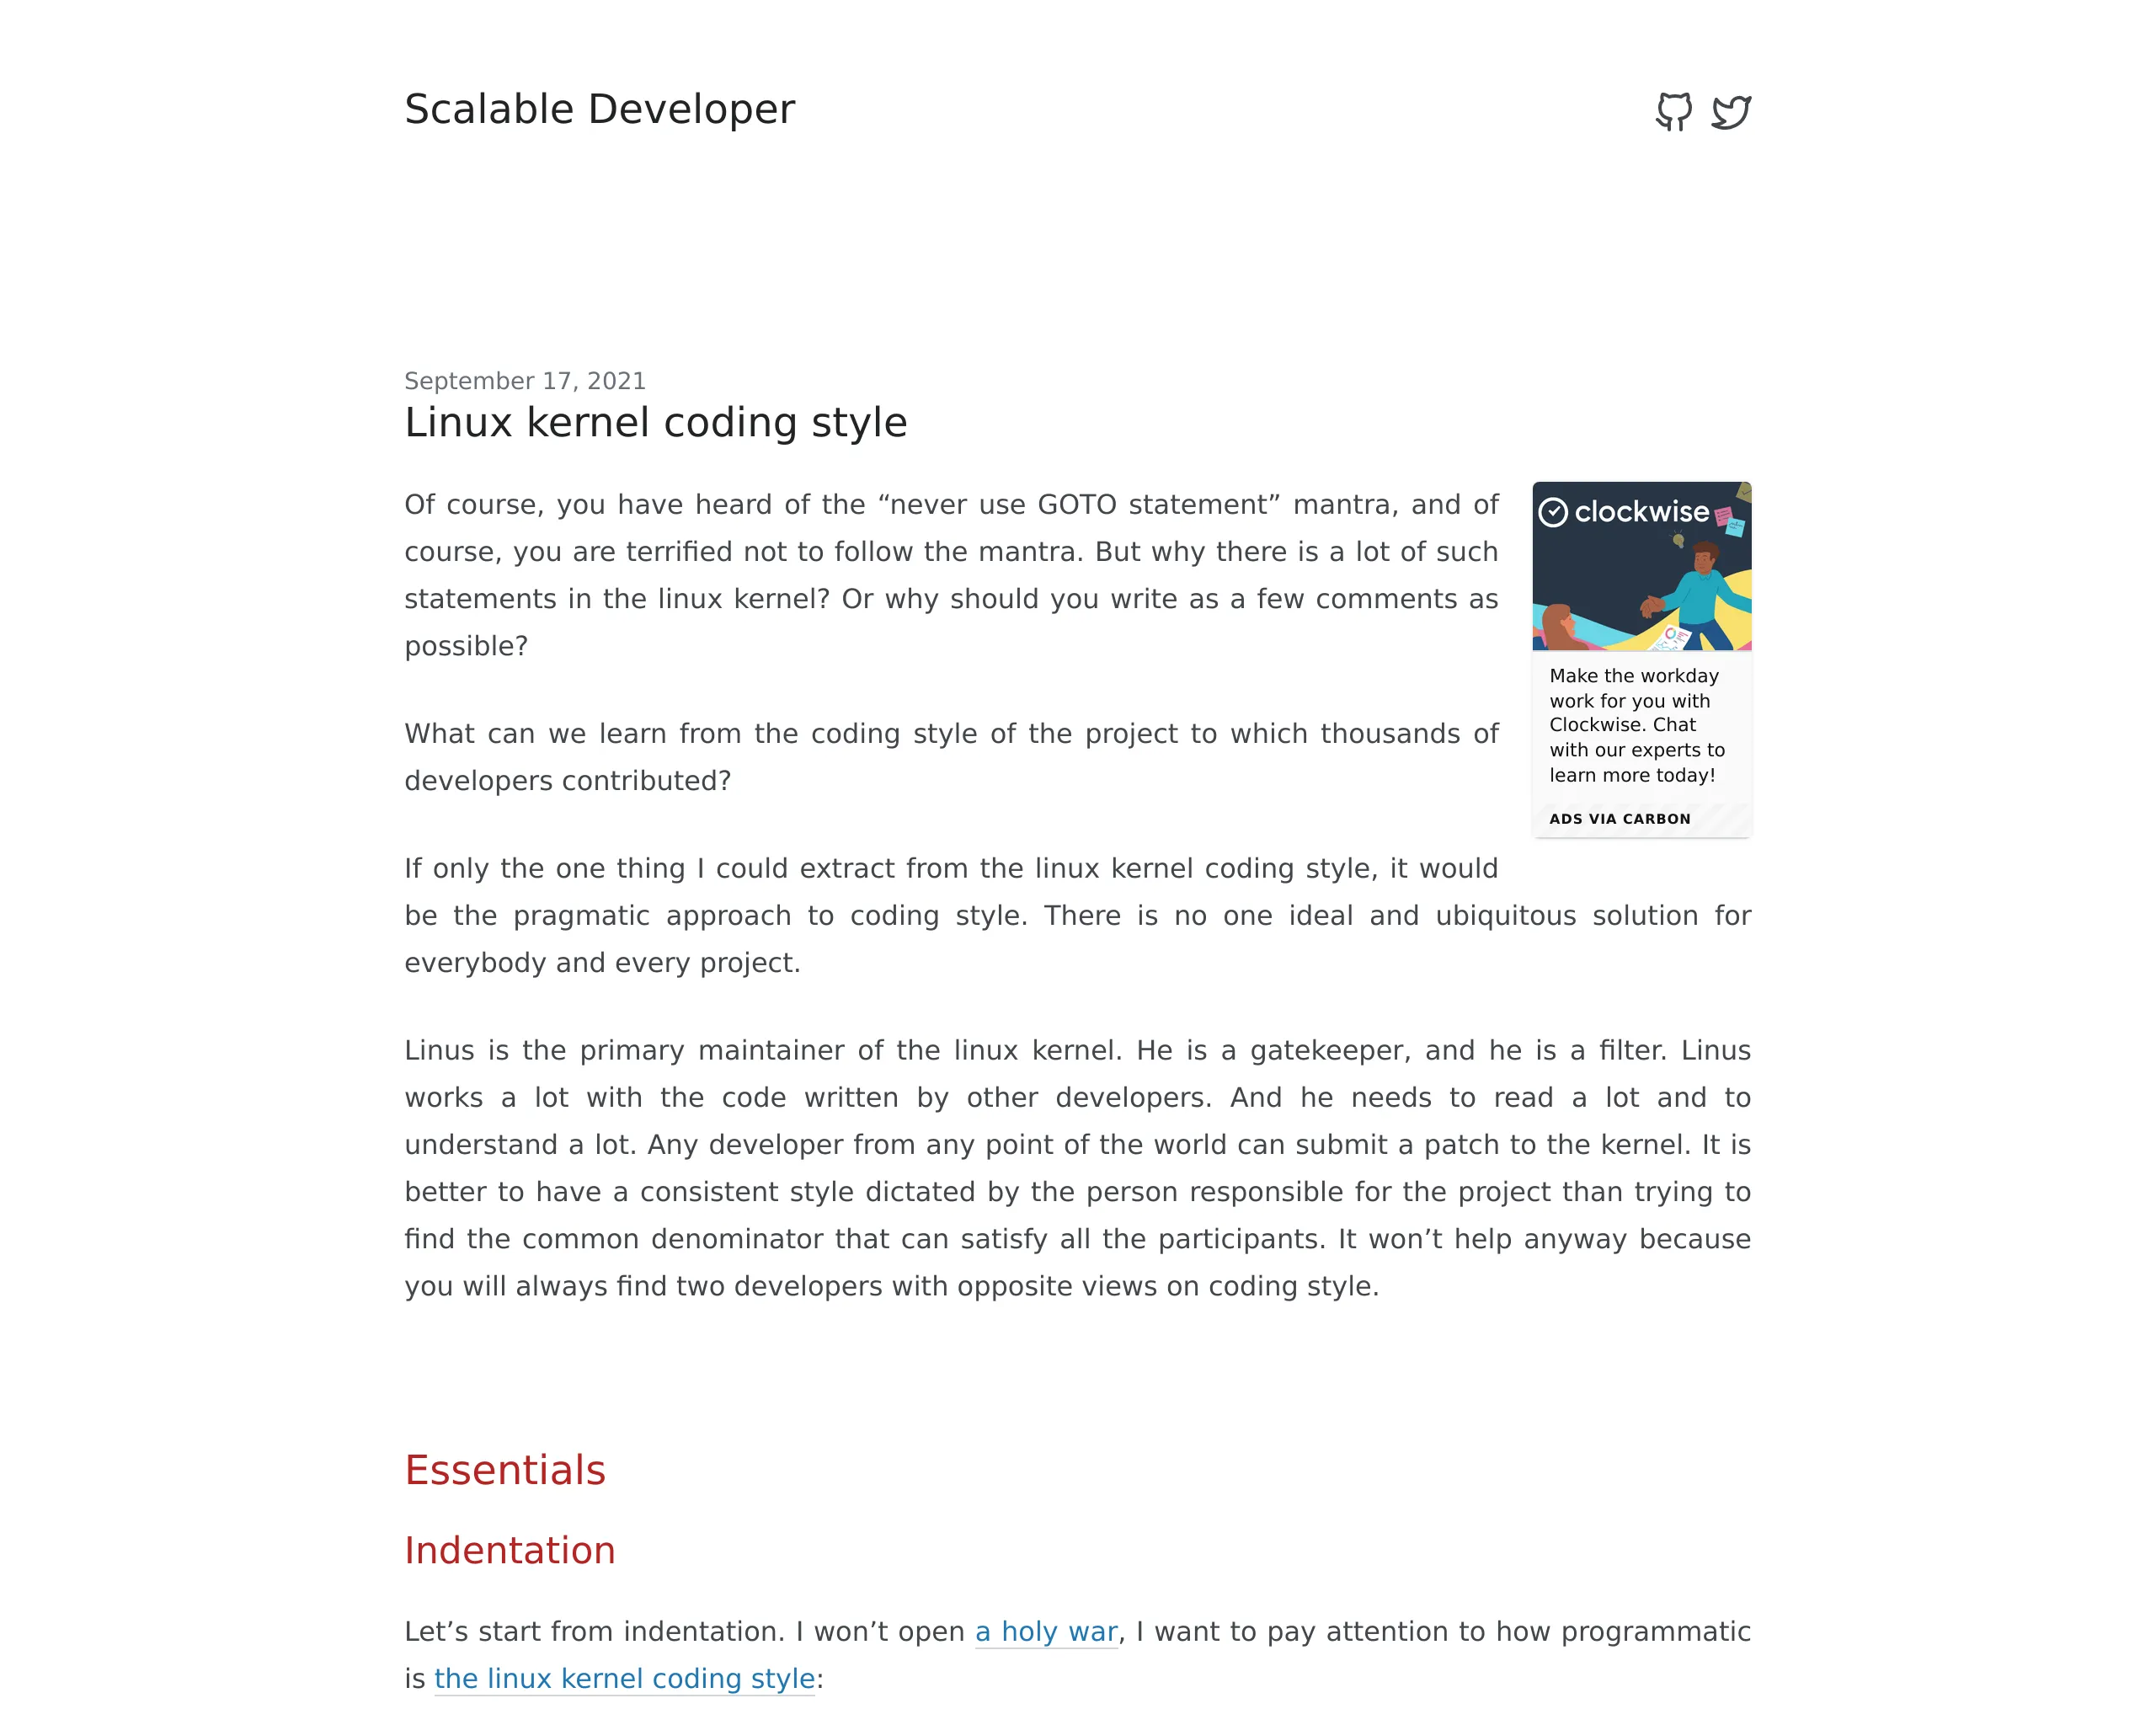 A screenshot of the Scalable Developer site taken by screenshot
API